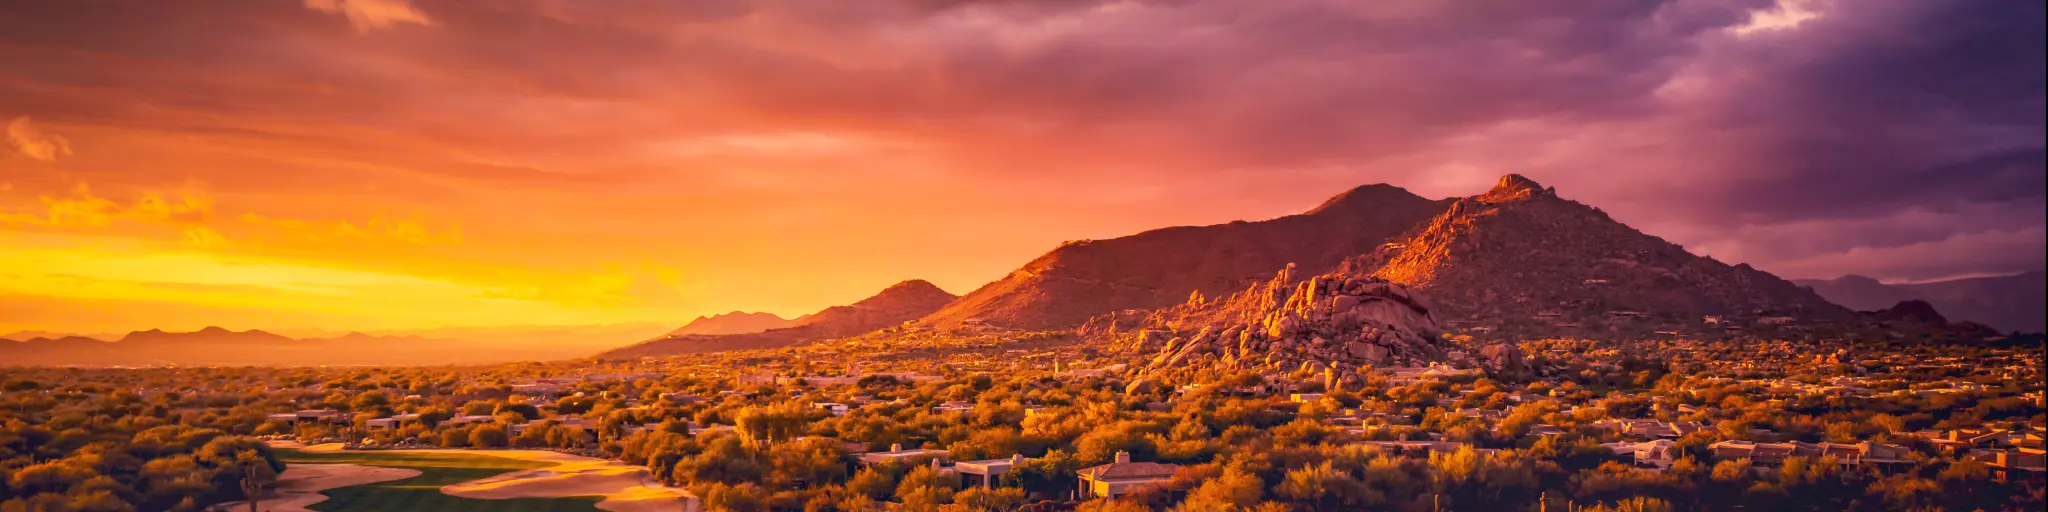 A panoramic view of the beautiful golden hour illuminating the desert of Scottsdale Arizona